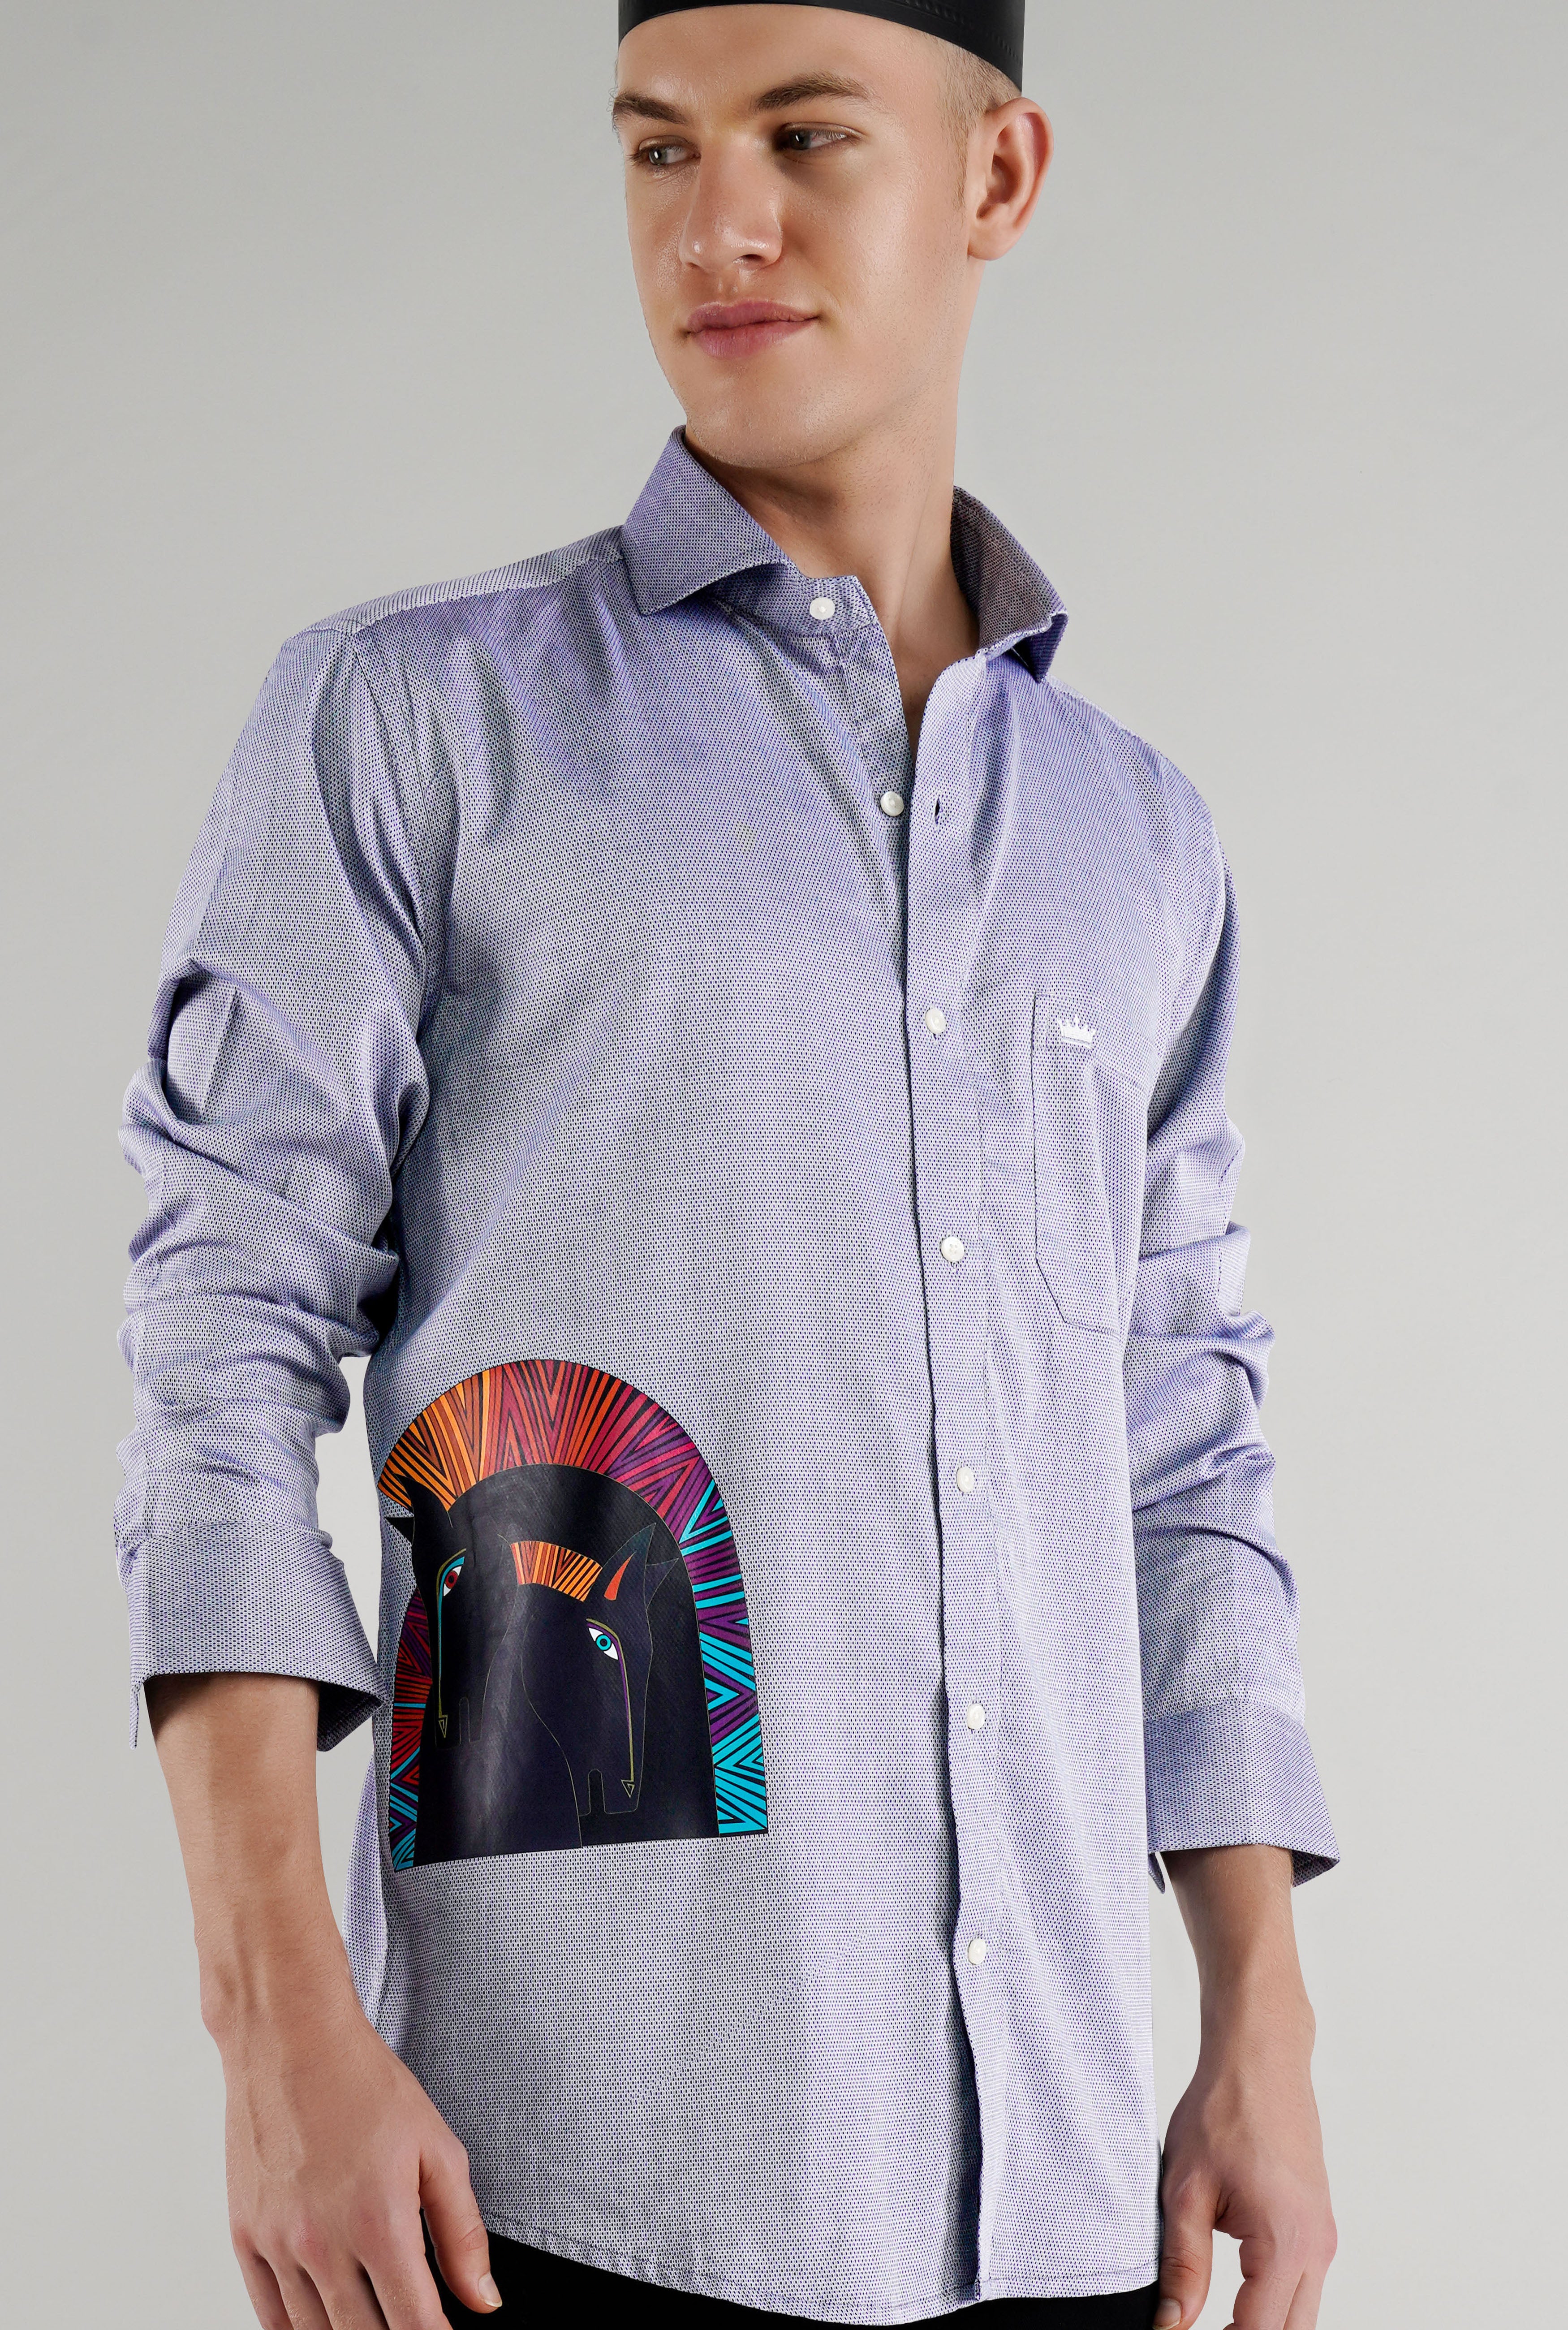 Spun Pearl with Artistic Printed Dobby Textured Premium Cotton Designer Shirt